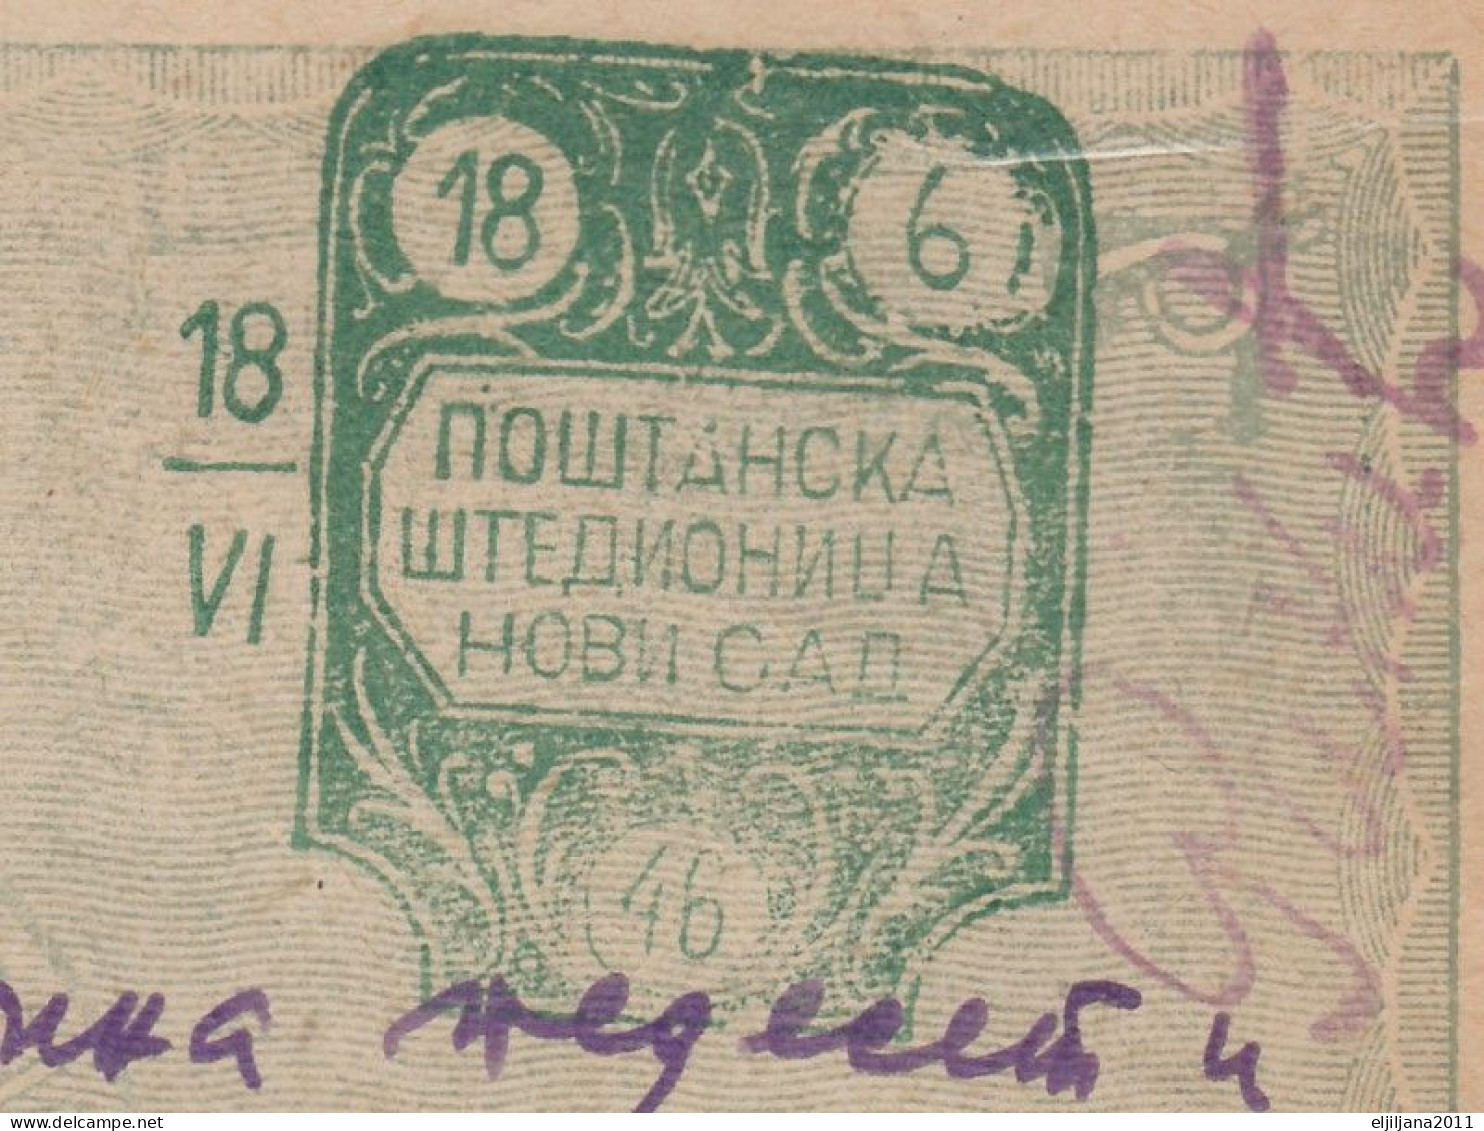 ⁕ Yugoslavia 1946 Serbia / Vojvodina ⁕ Postal Savings Bank Novi Sad - Money Order Receipt - PORTO Official ⁕ PETROVGRAD - Timbres-taxe